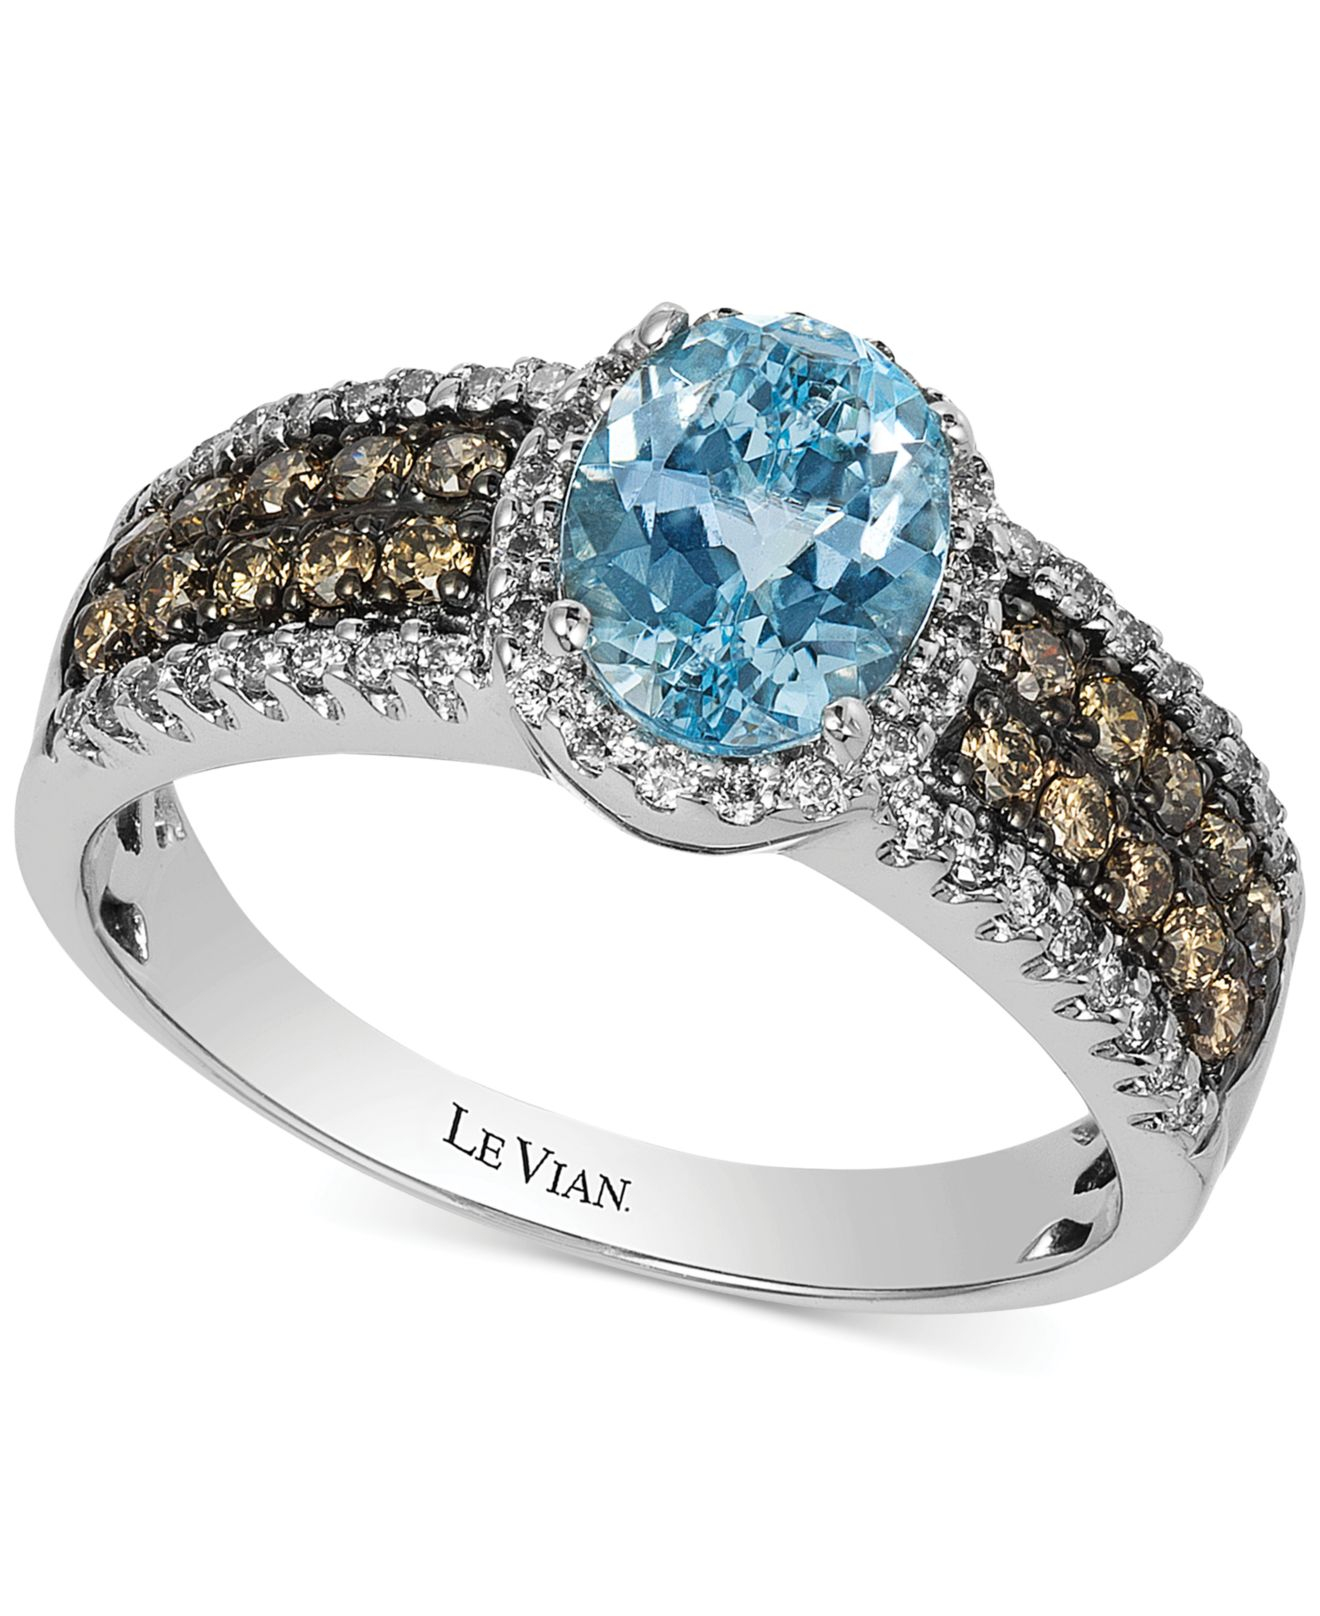 Le vian Aquamarine (1 Ct. T.w.) And Diamond (5/8 Ct. T.w.) Ring In 14k